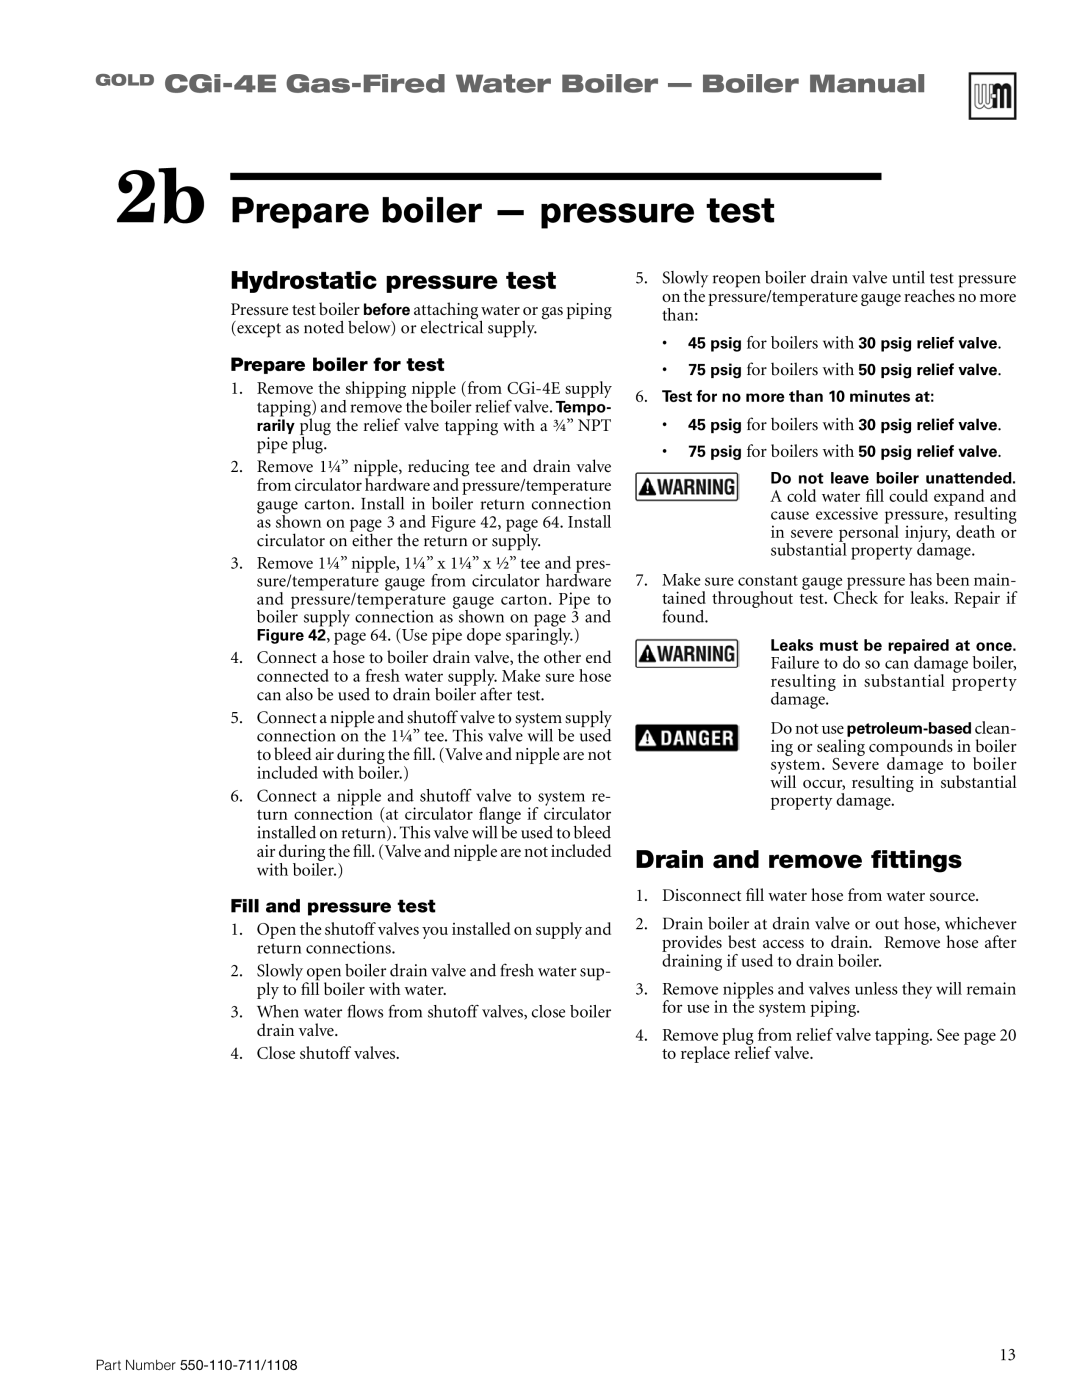 Weil-McLain CGI-4E manual 2b Prepare boiler - pressure test, GOLD CGi-4E Gas-FiredWater Boiler - Boiler Manual 